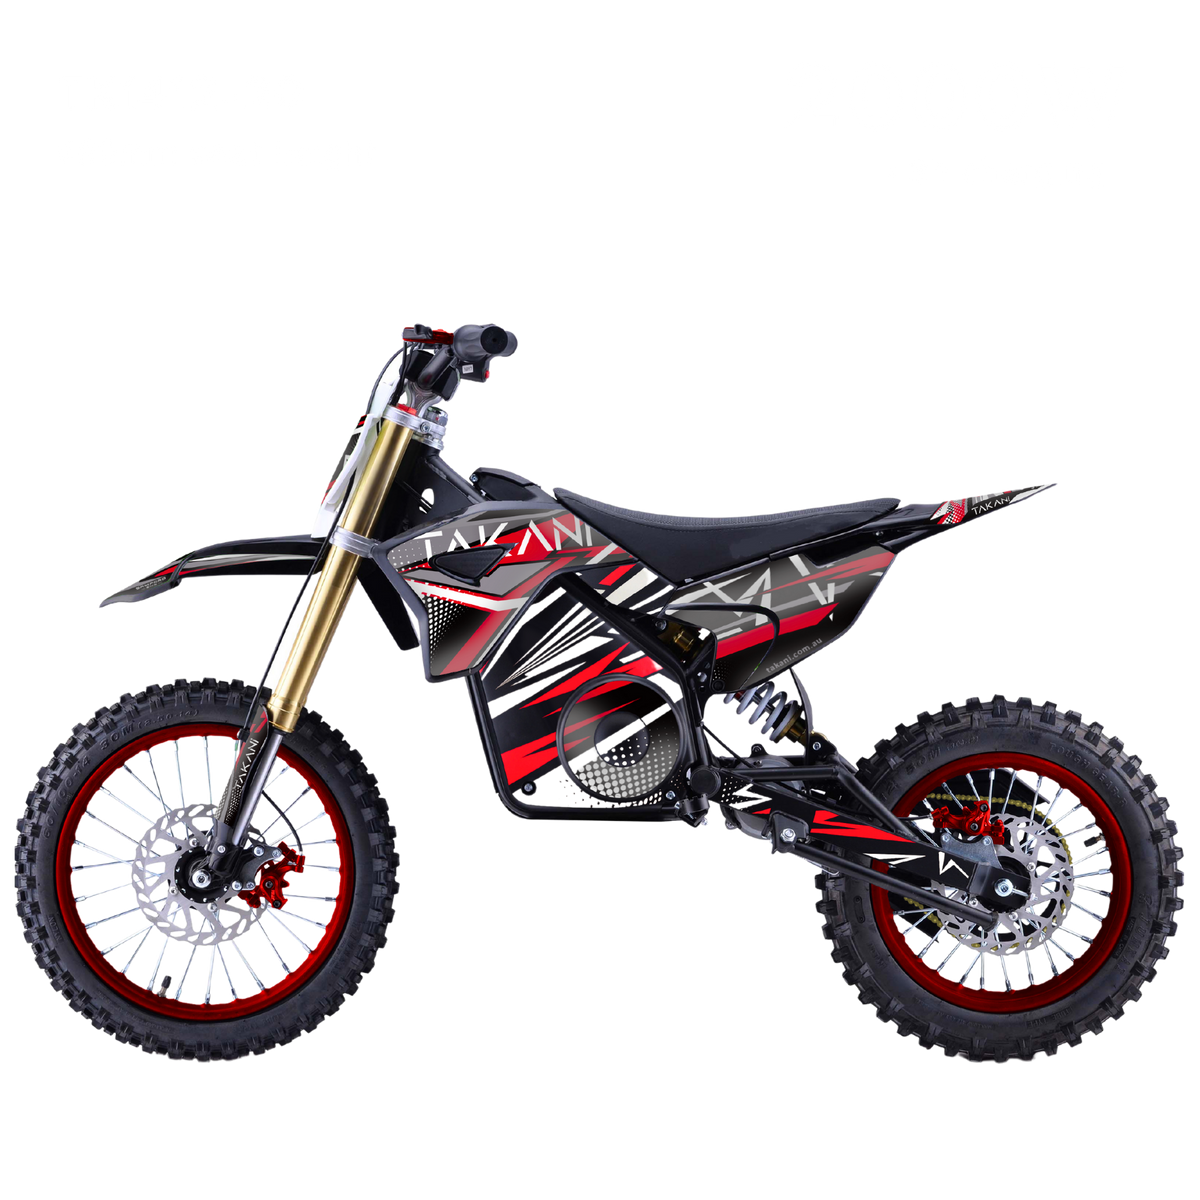 Takani TK1210-20 2000w Motor